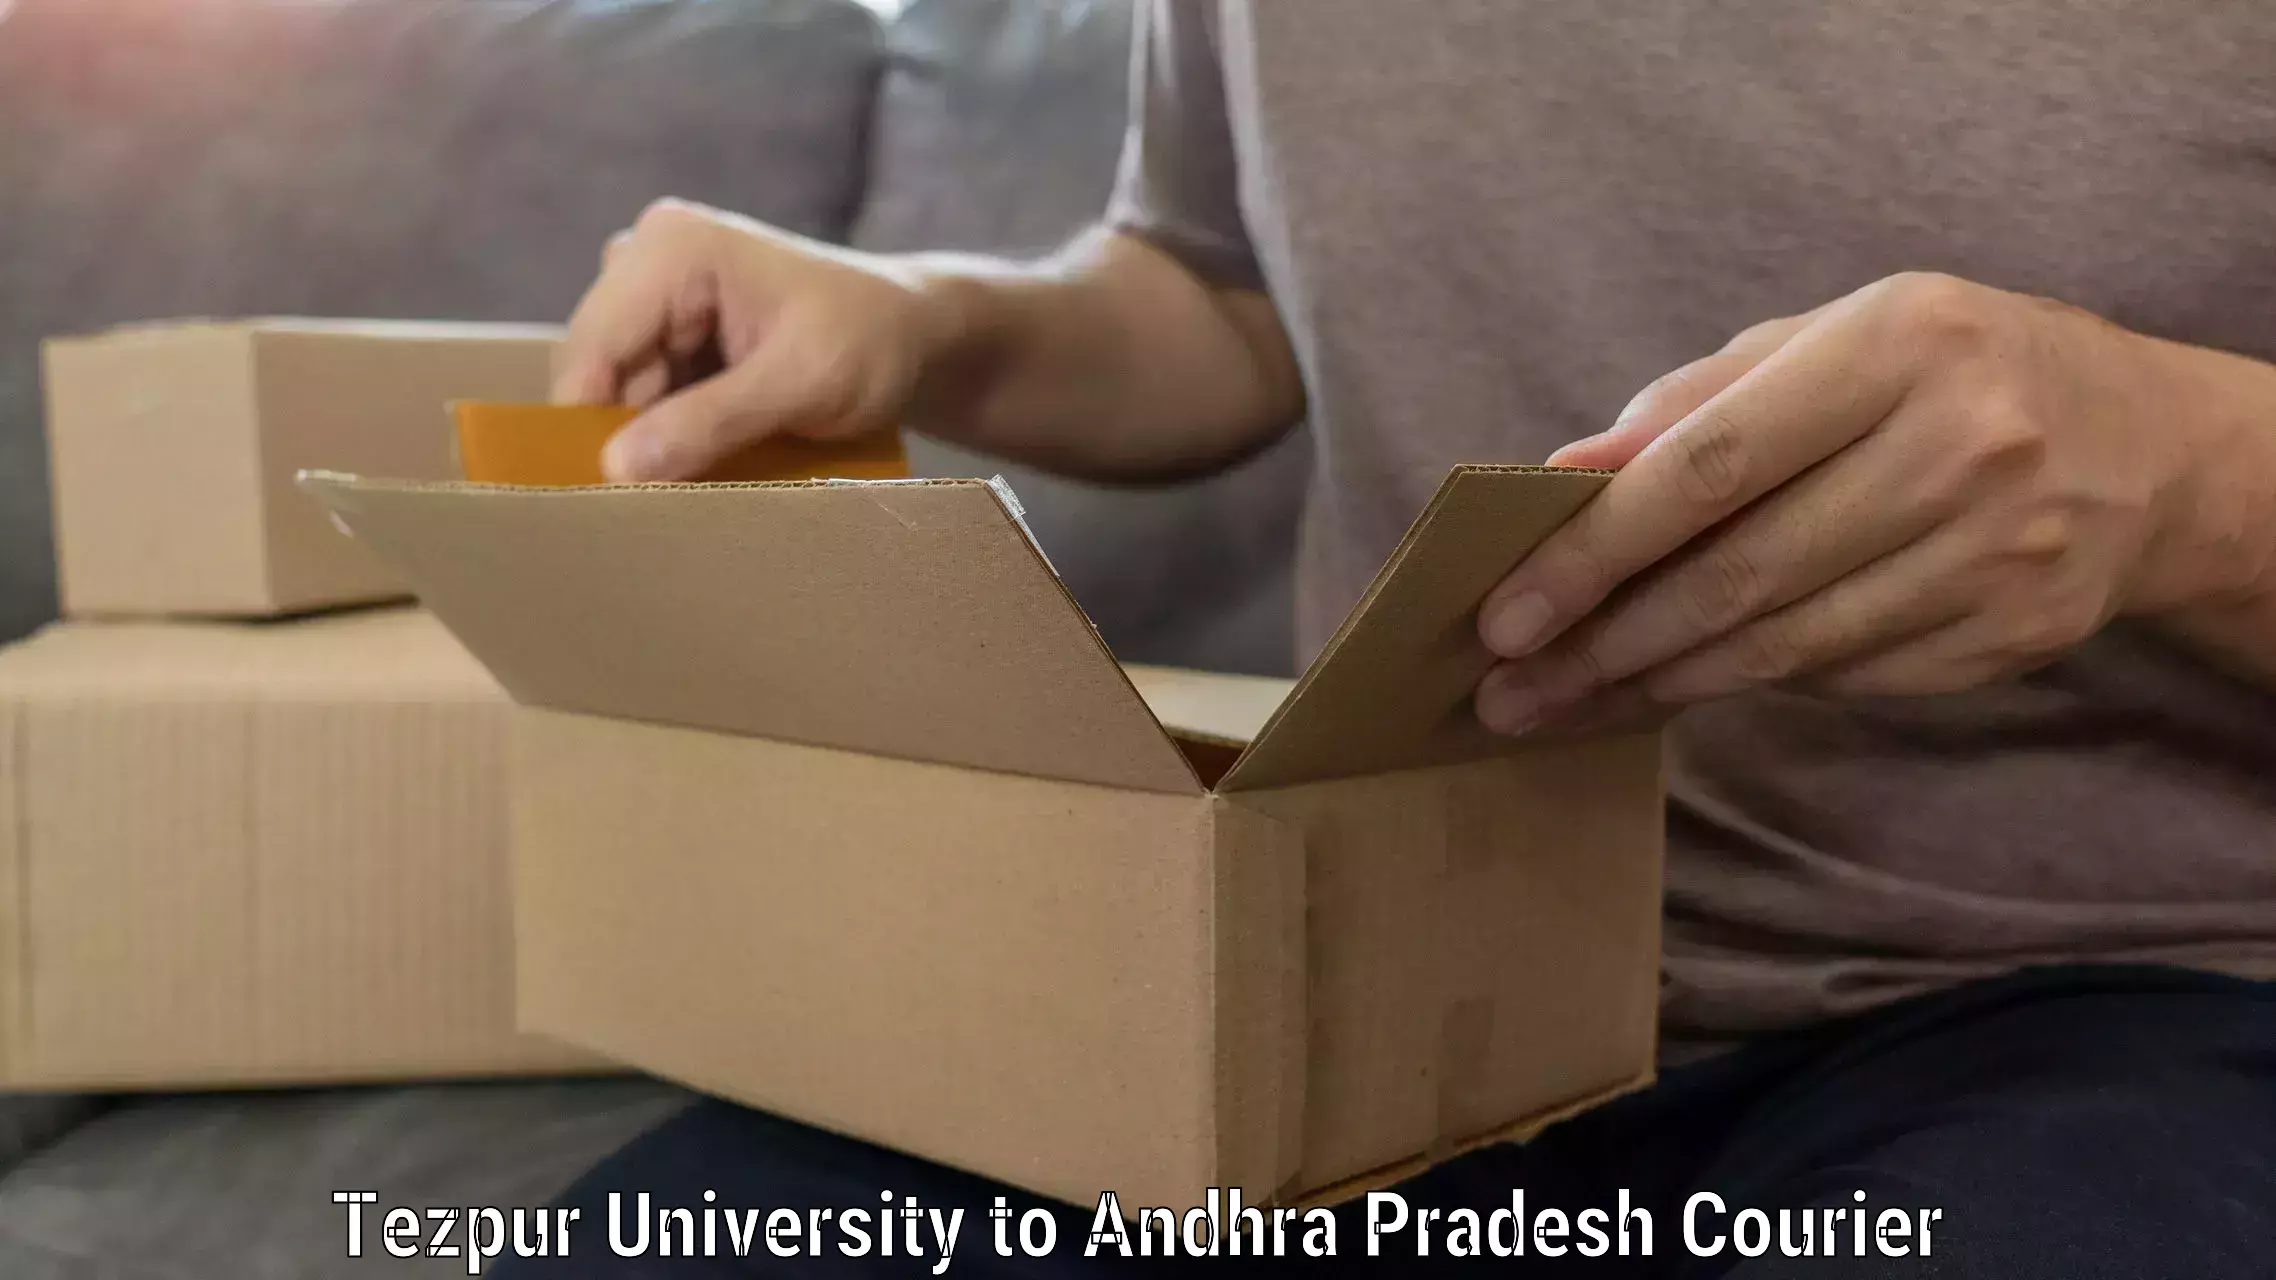 Quality moving and storage Tezpur University to Andhra Pradesh